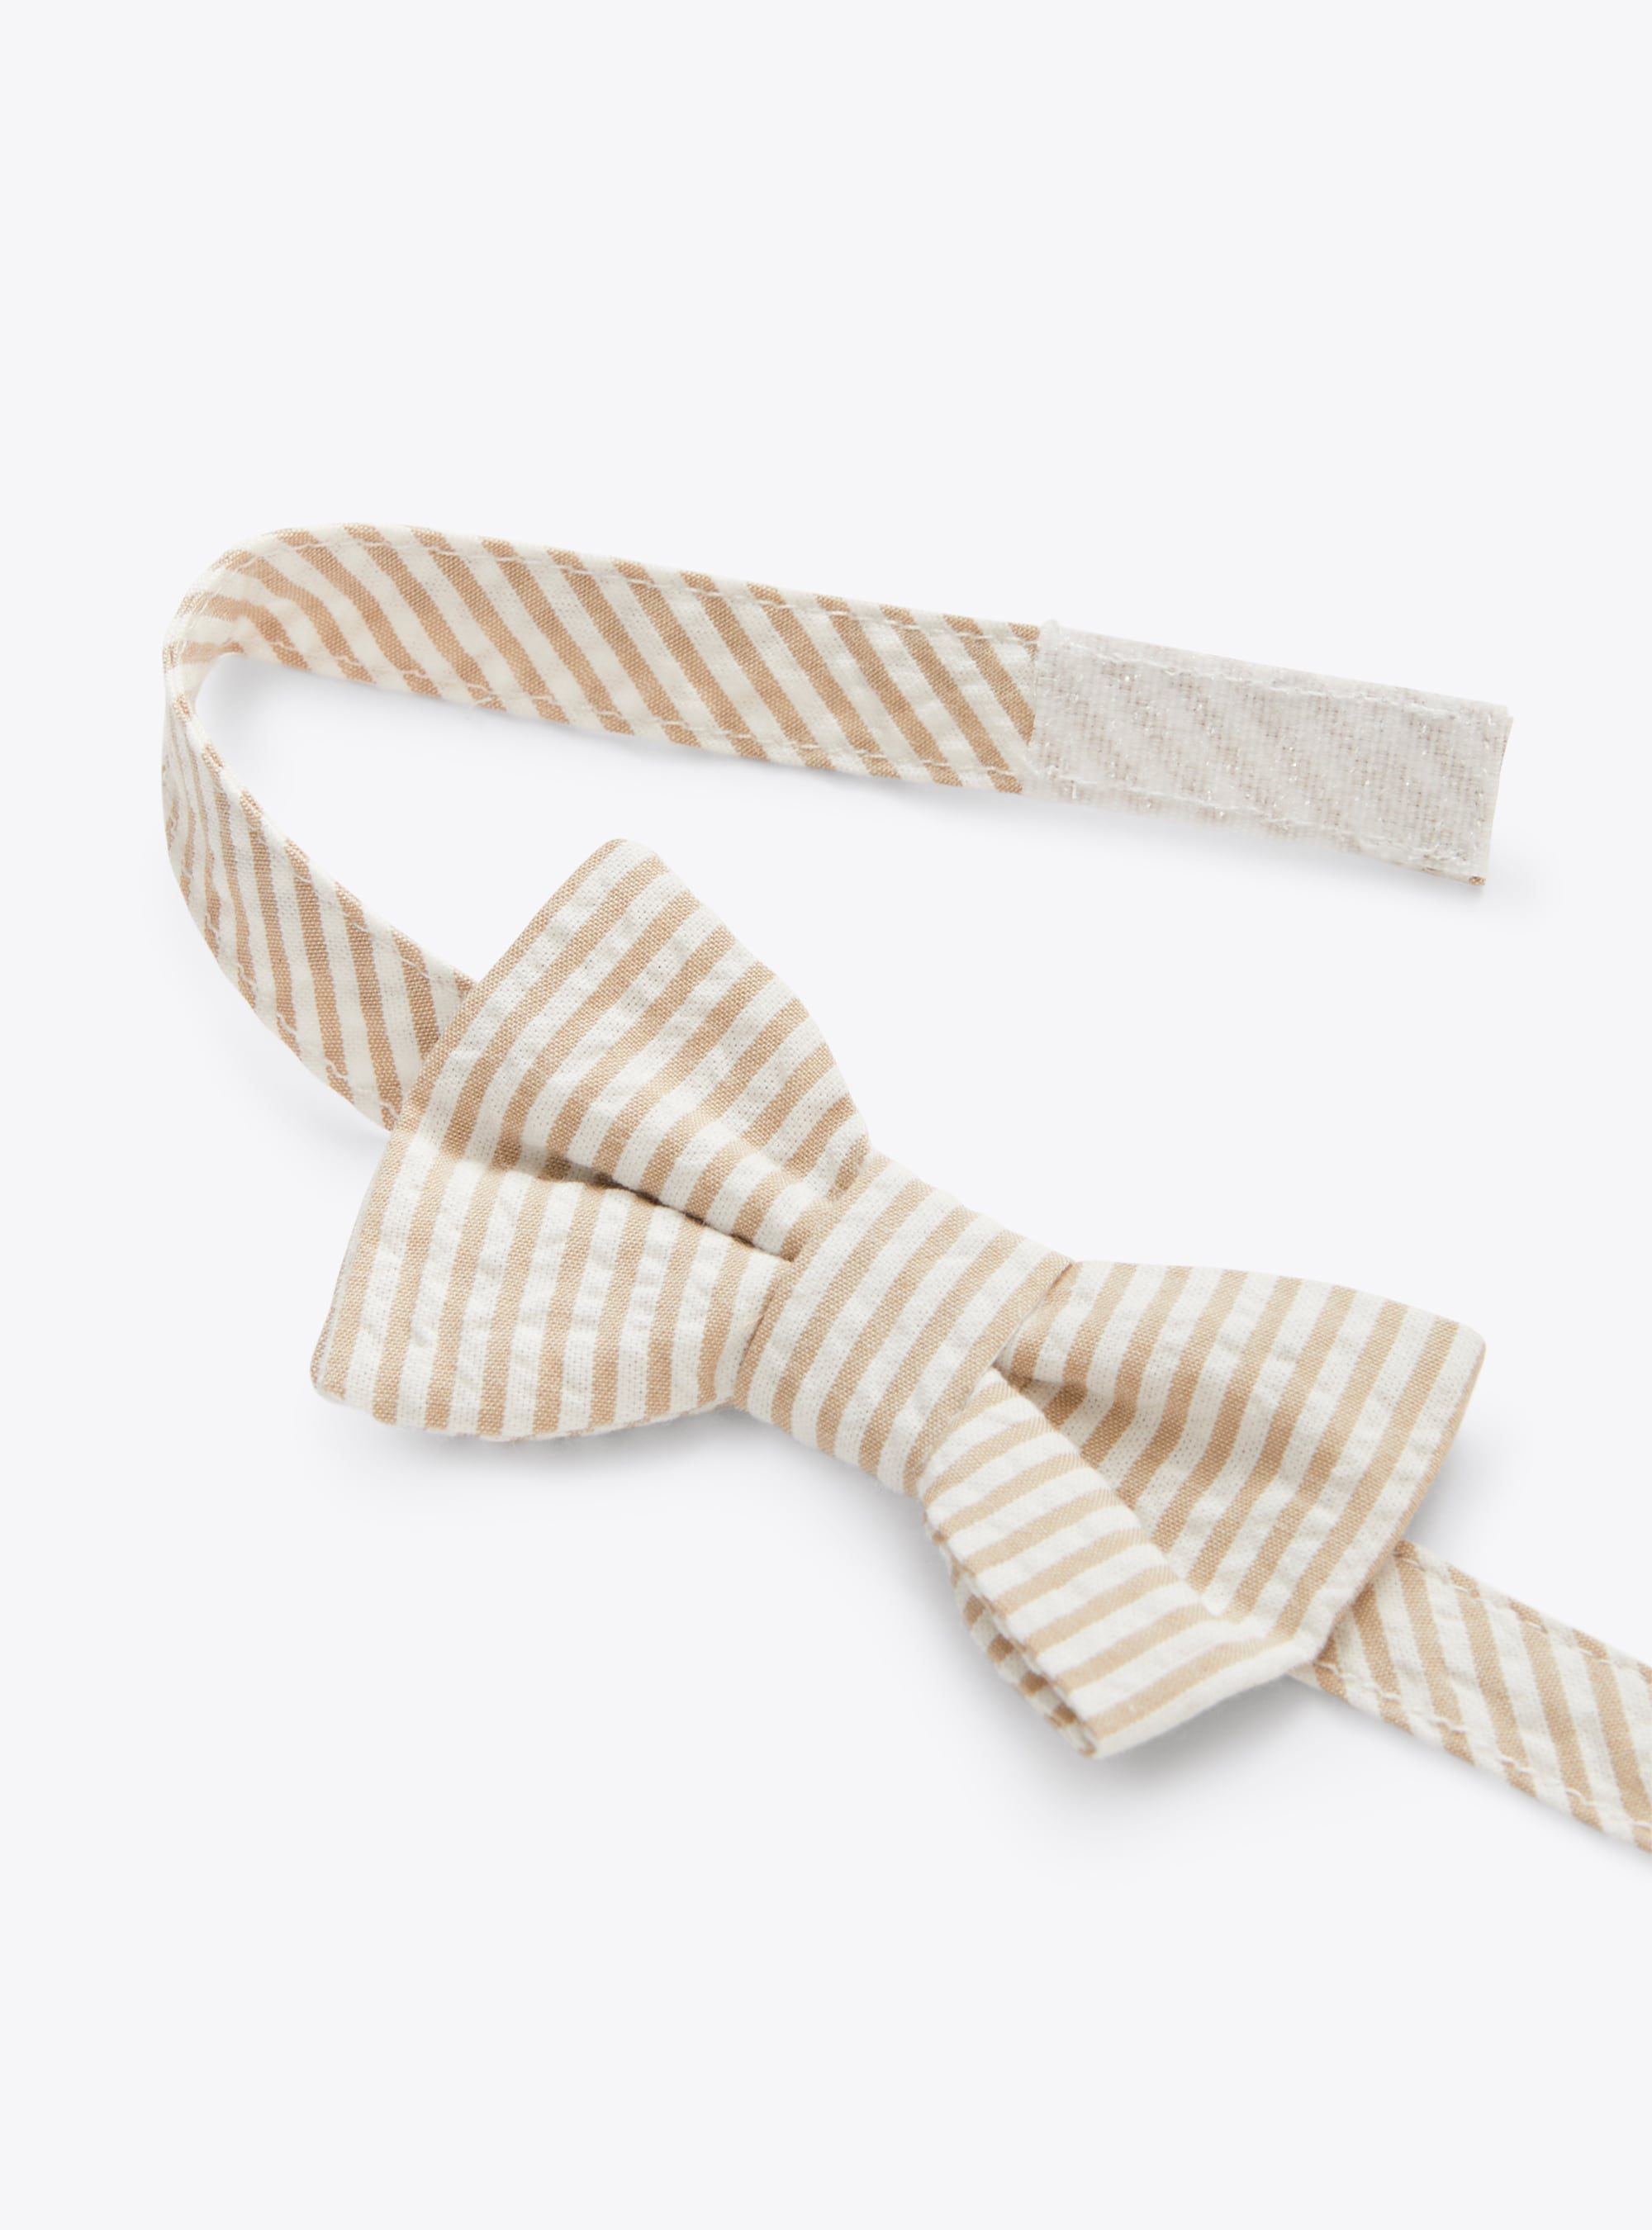 Bow tie in beige-&-white striped seersucker - Beige | Il Gufo